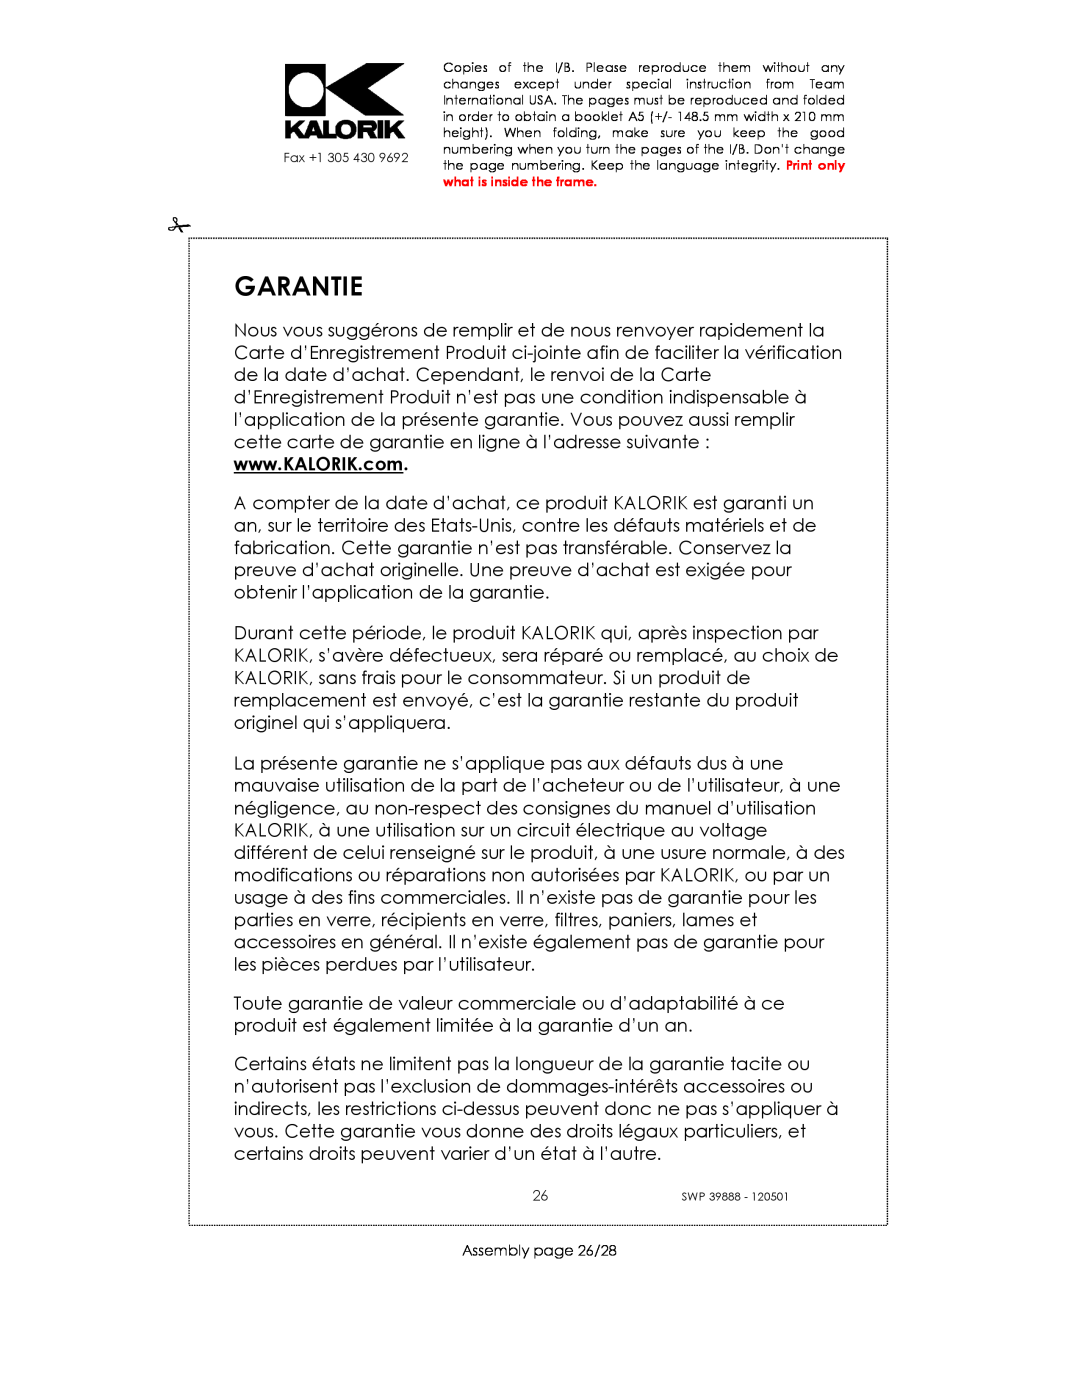 Kalorik SWP 39888 manual Garantie, Assembly page 26/28 